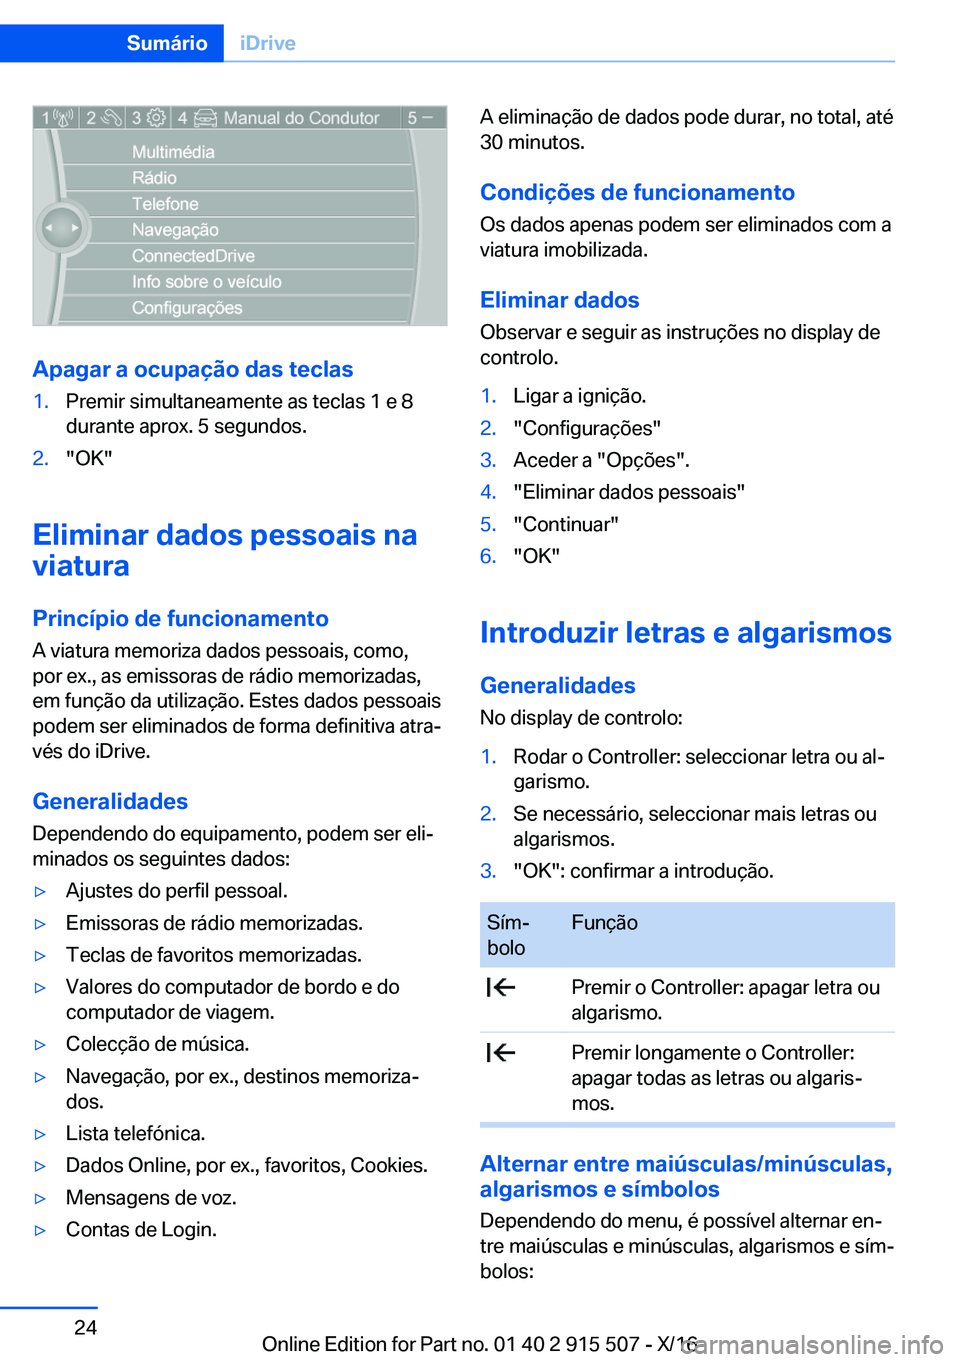 BMW X5 2017  Manual do condutor (in Portuguese) �A�p�a�g�a�r��a��o�c�u�p�a�